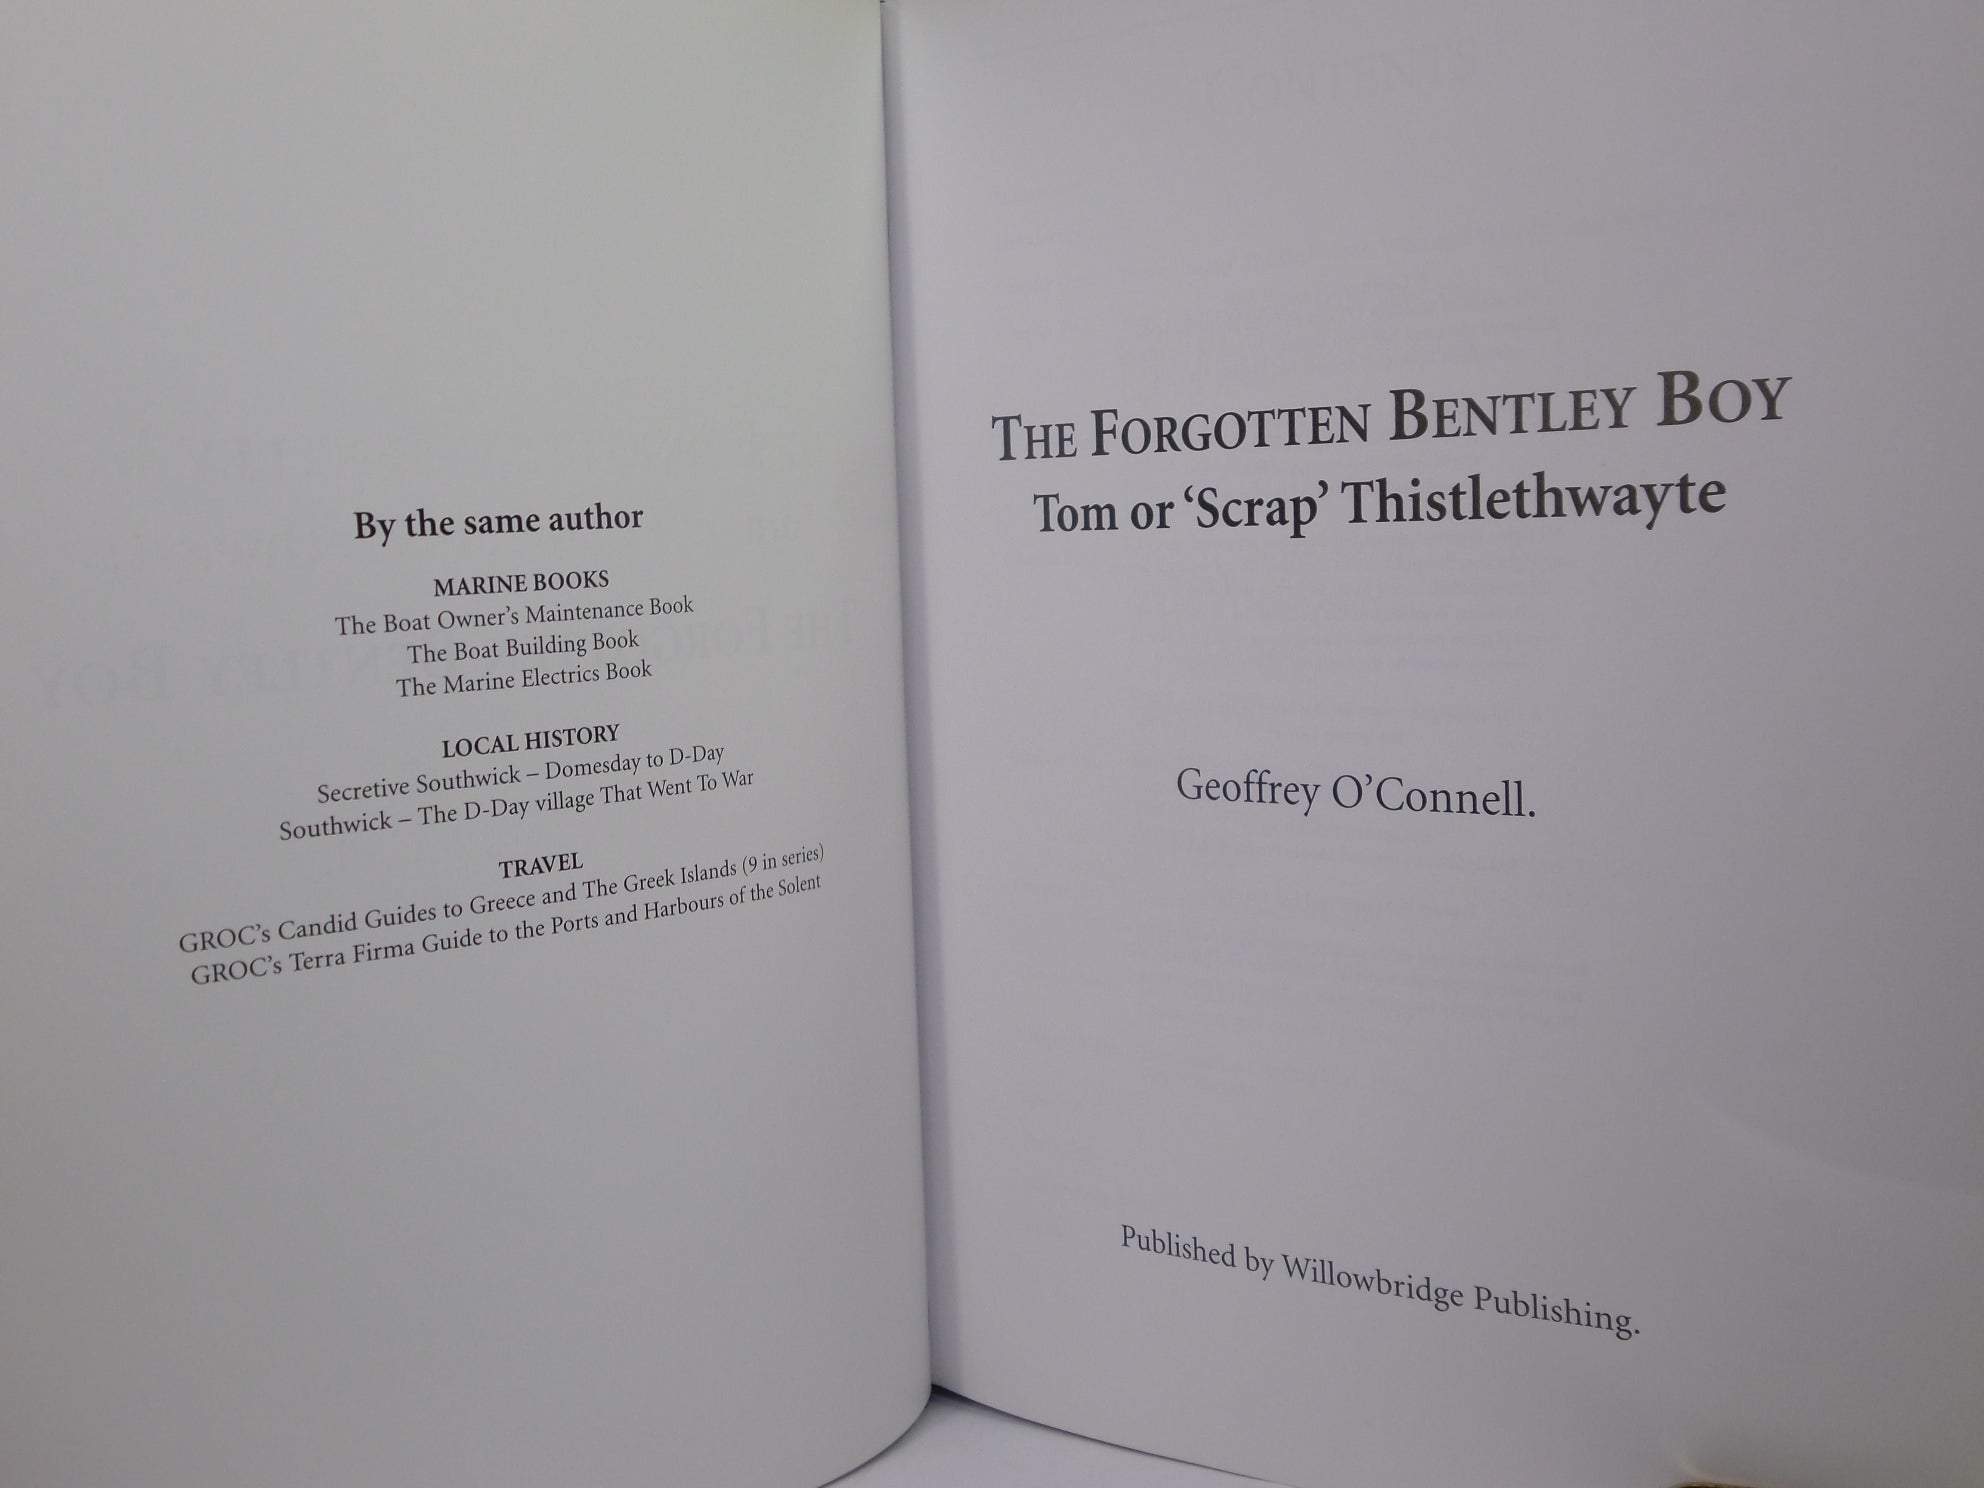 THE FORGOTTEN BENTLEY BOY: TOM OR 'SCRAP' THISTLETHWAYTE BY GEOFFREY O'CONNELL